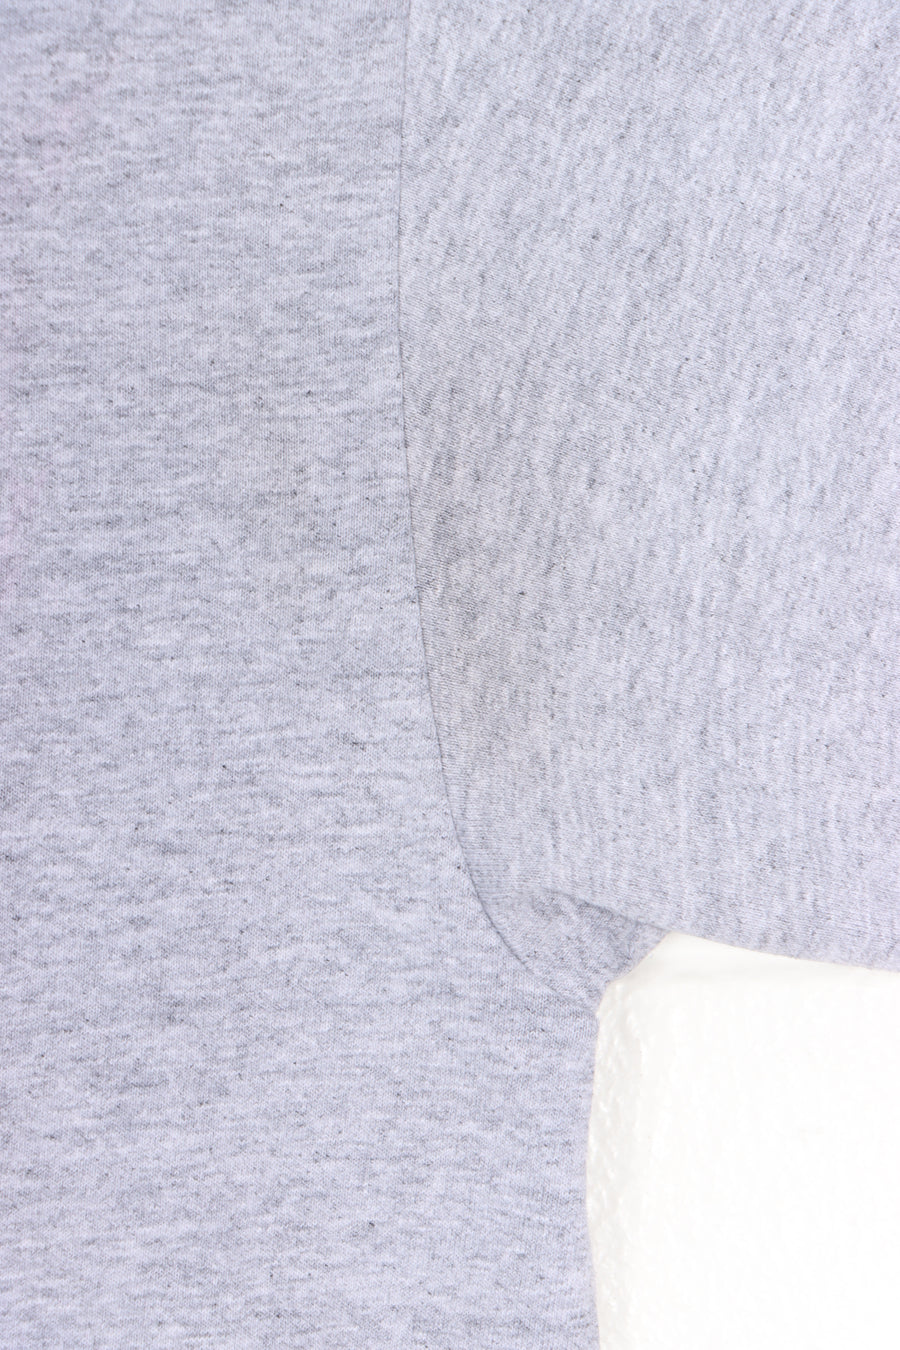 NIKE Embroidered Swoosh Logo Grey T-Shirt (L)